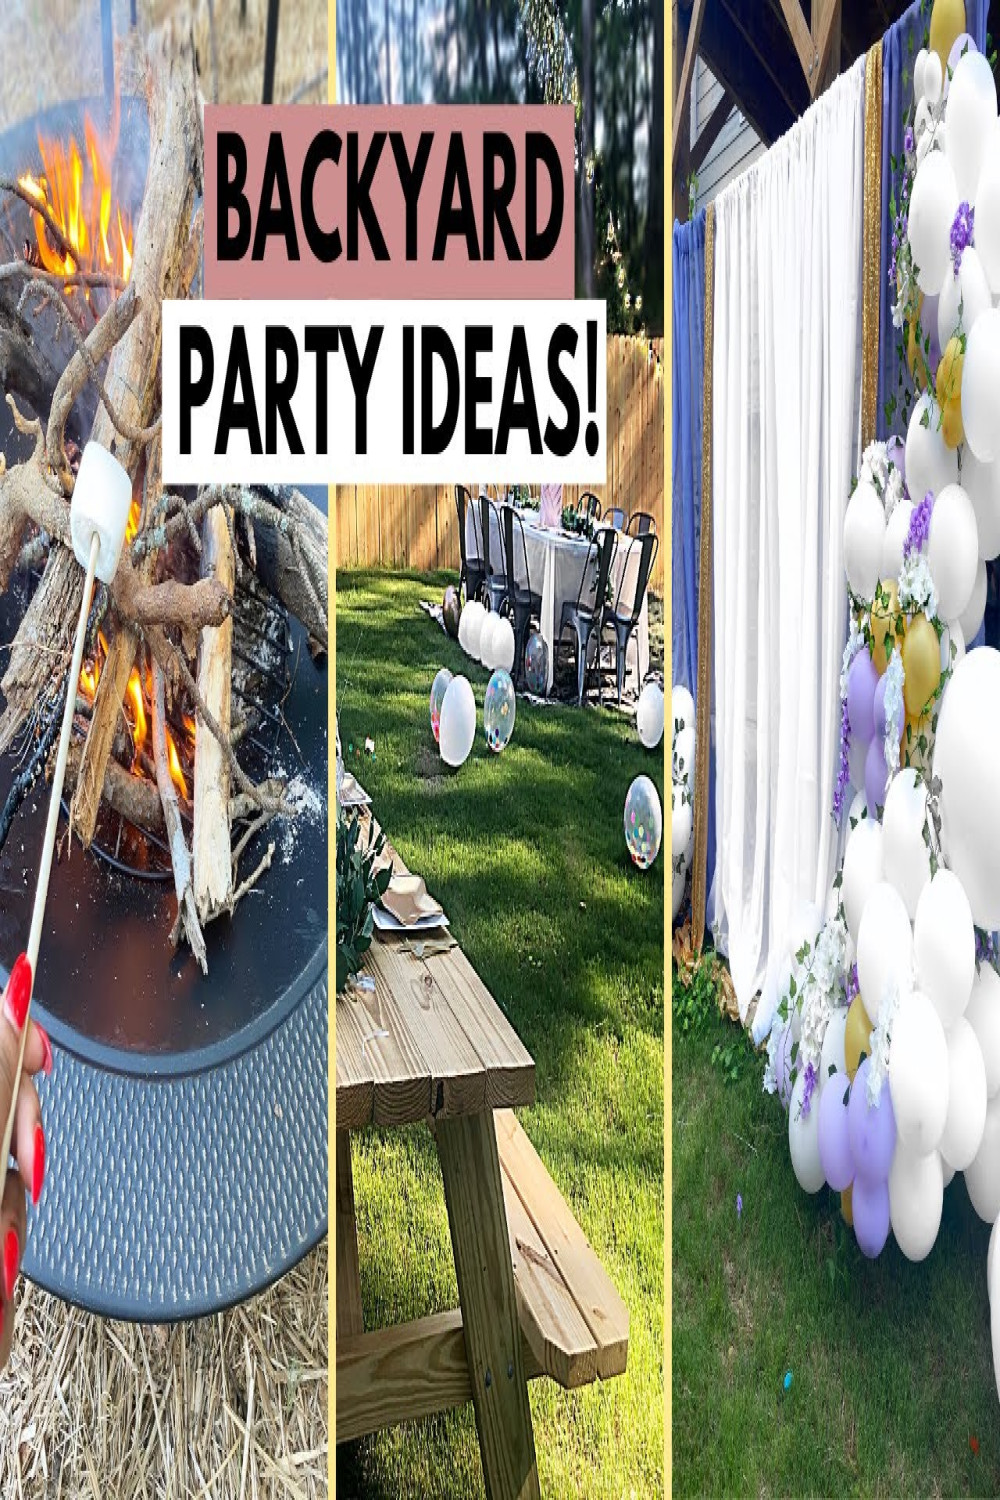 BACKYARD PARTY IDEAS!  Affordable Backyard Decor, Fire Pit, and Fun!   Dollar Tree & Walmart